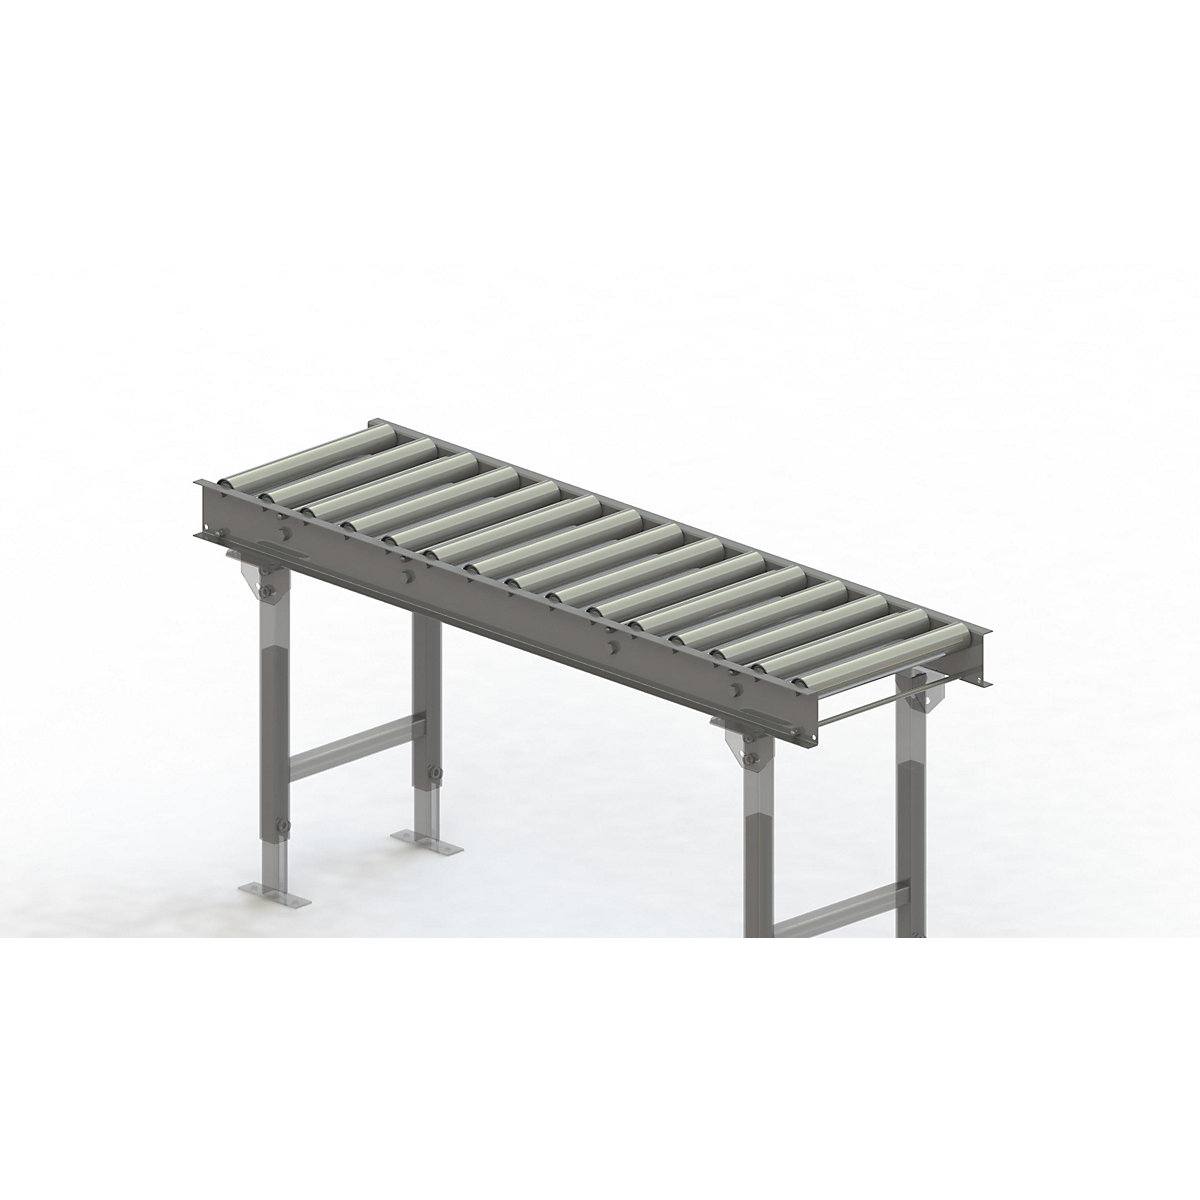 Gura – Roller conveyor, steel frame with zinc plated steel rollers, track width 400 mm, distance between axles 100 mm, length 1.5 m